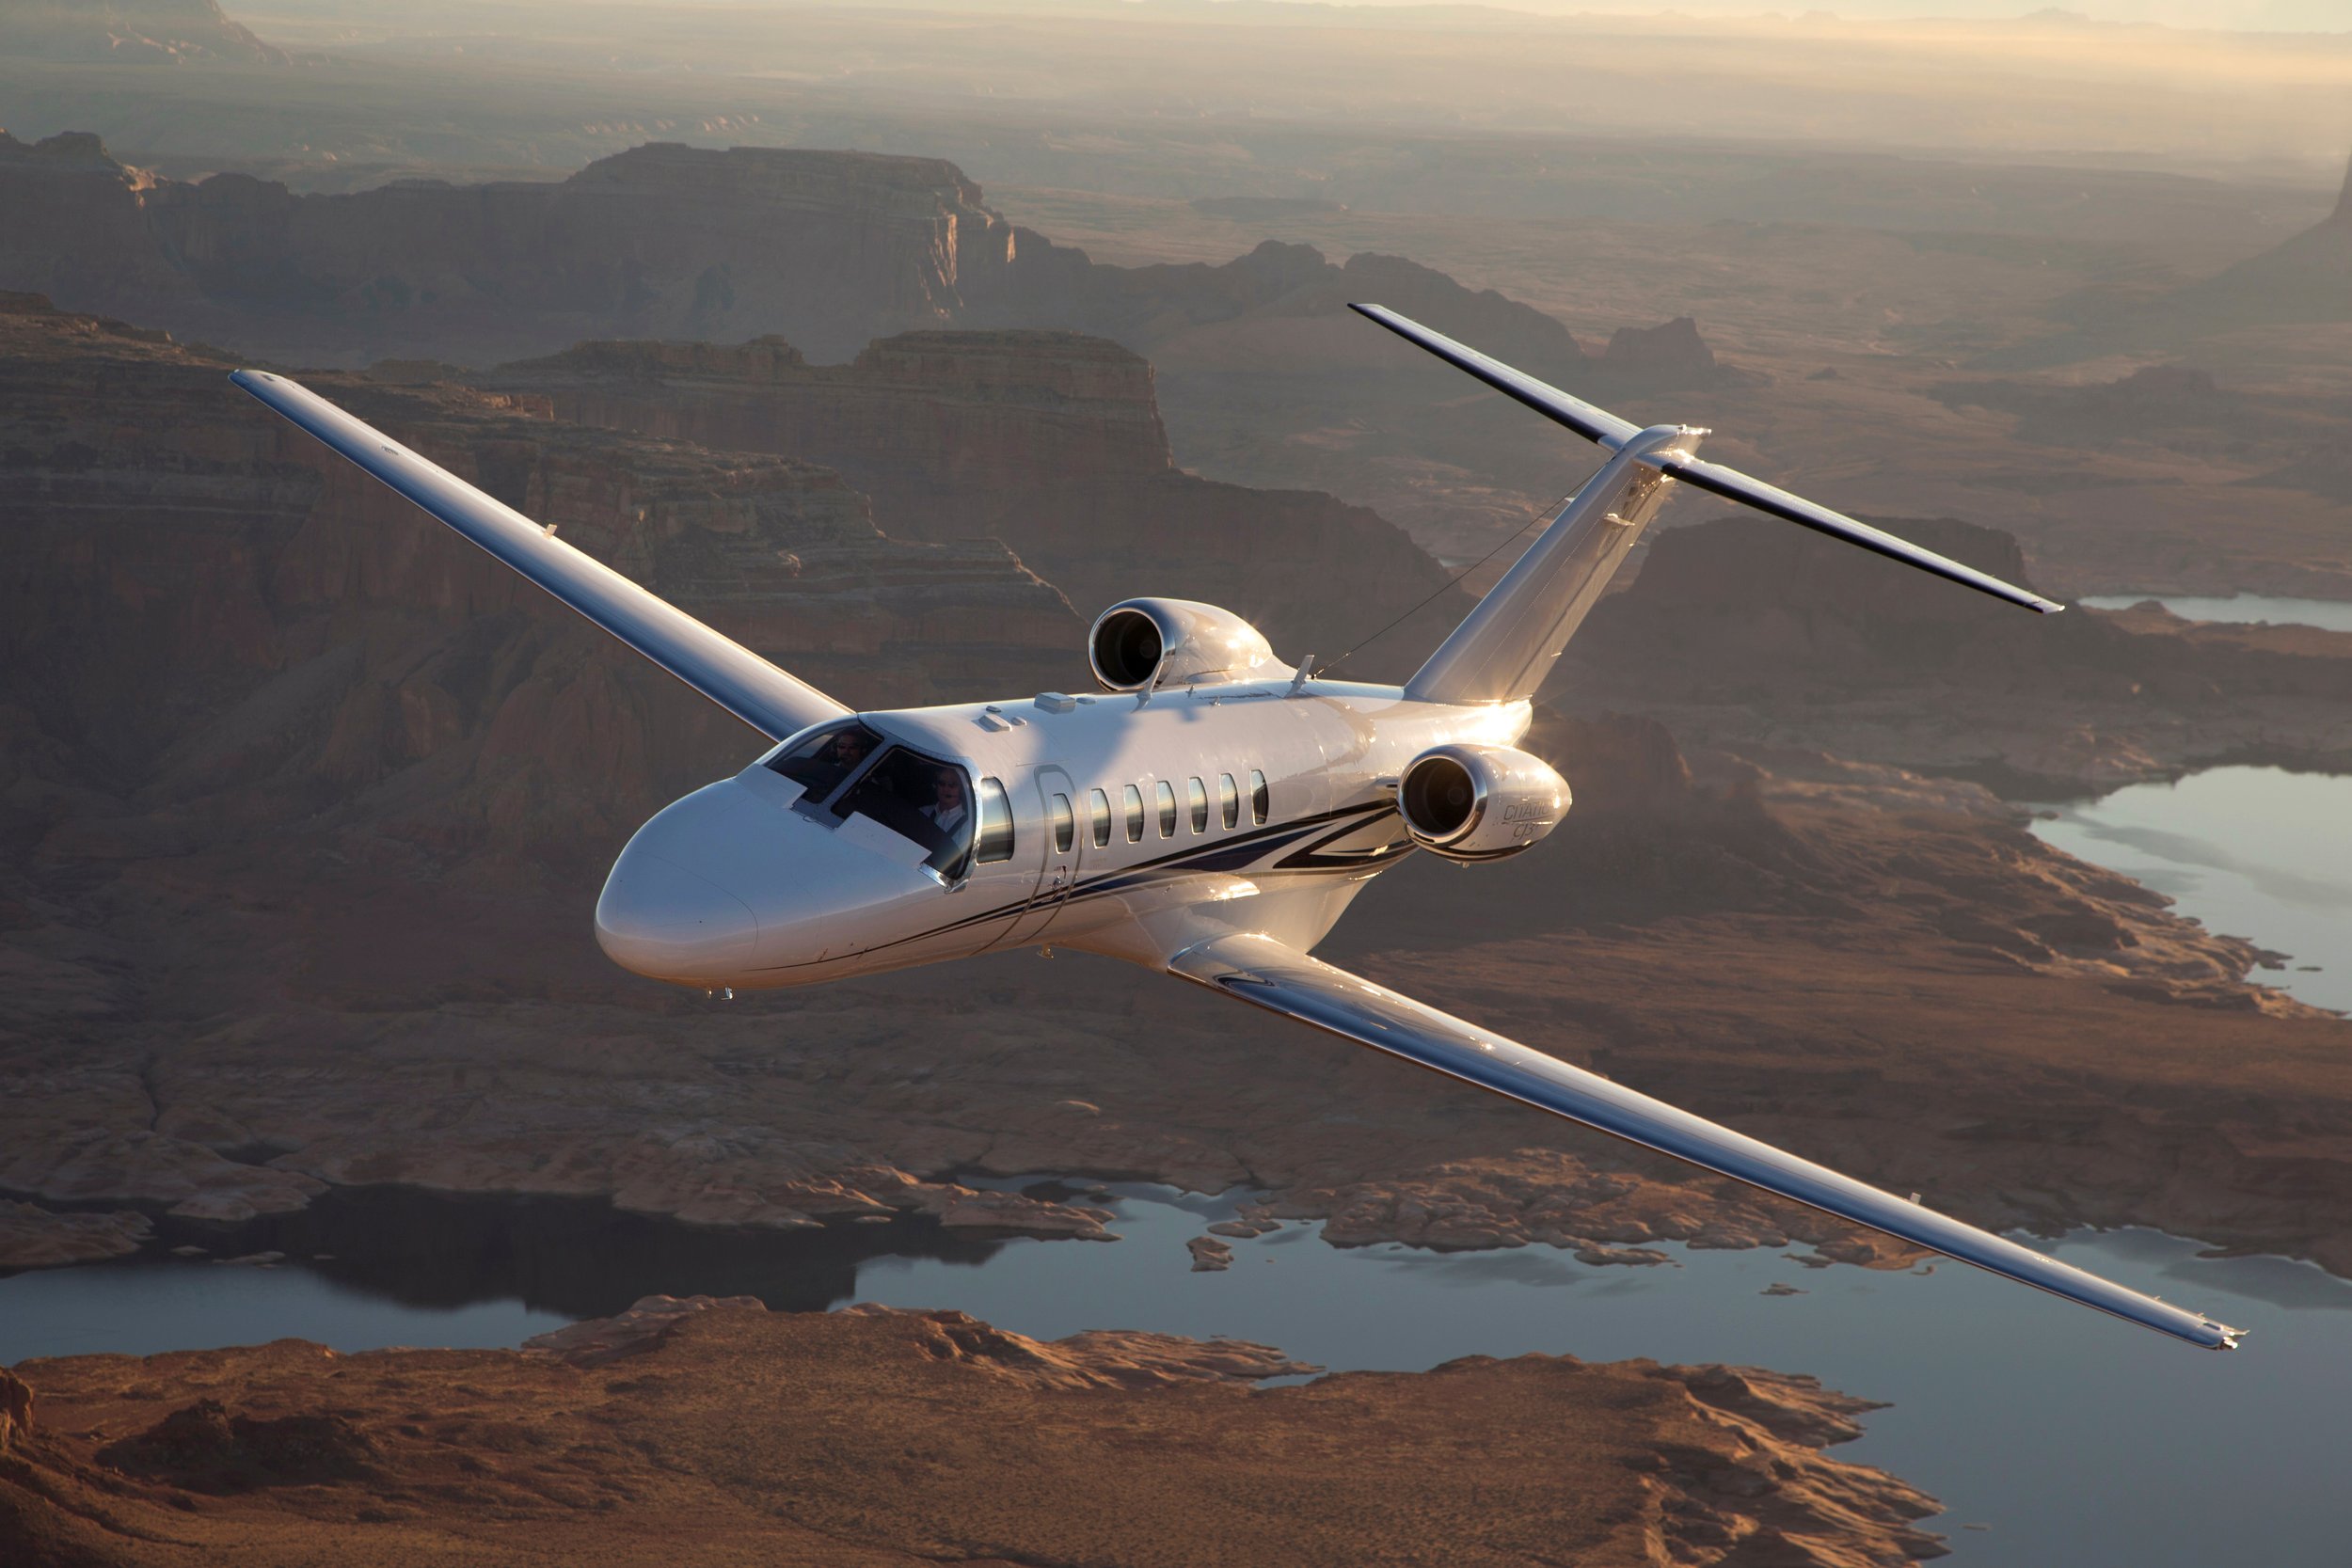   The CESSNA CITATION CJ3 jet delivers superior productivity and comfort  